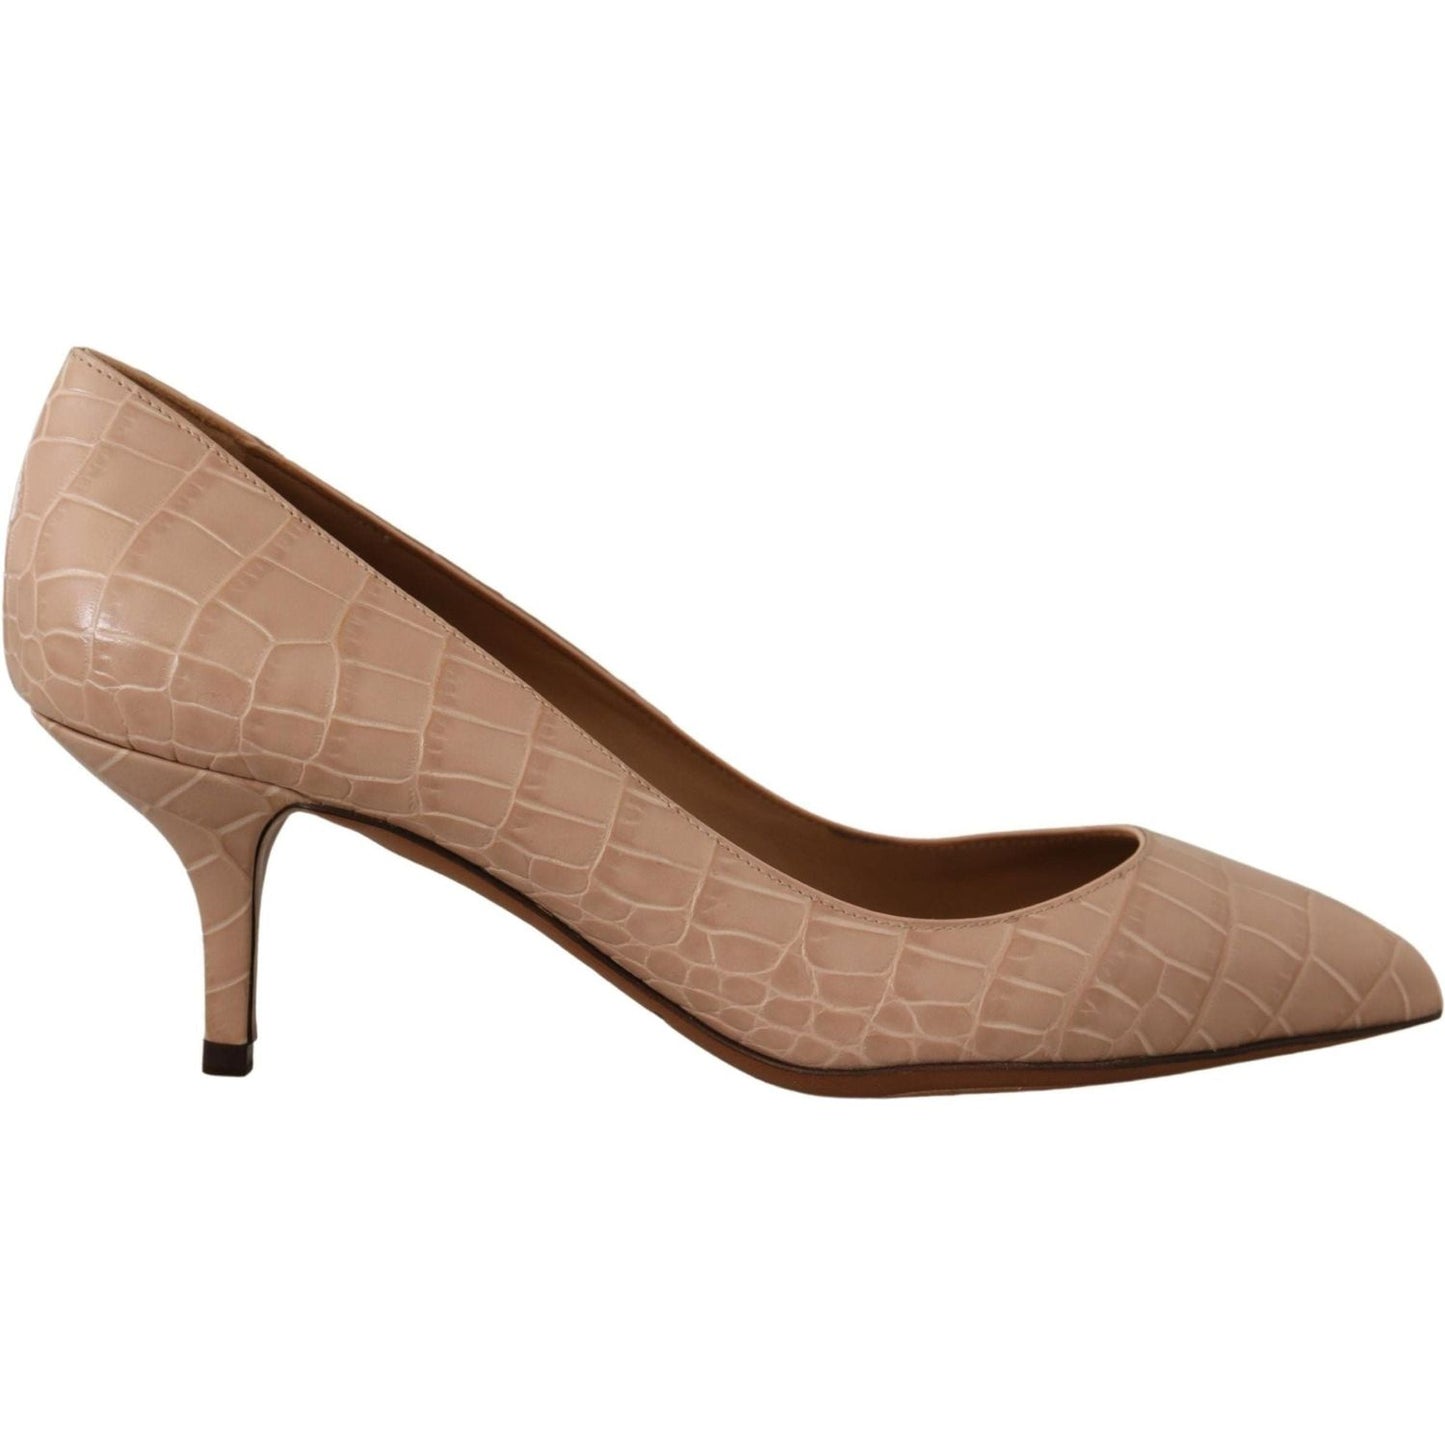 Dolce & Gabbana Elegant Beige Leather Pumps beige-leather-pointed-heels-pumps-shoes IMG_0729-scaled-3b0bf0c8-163.jpg